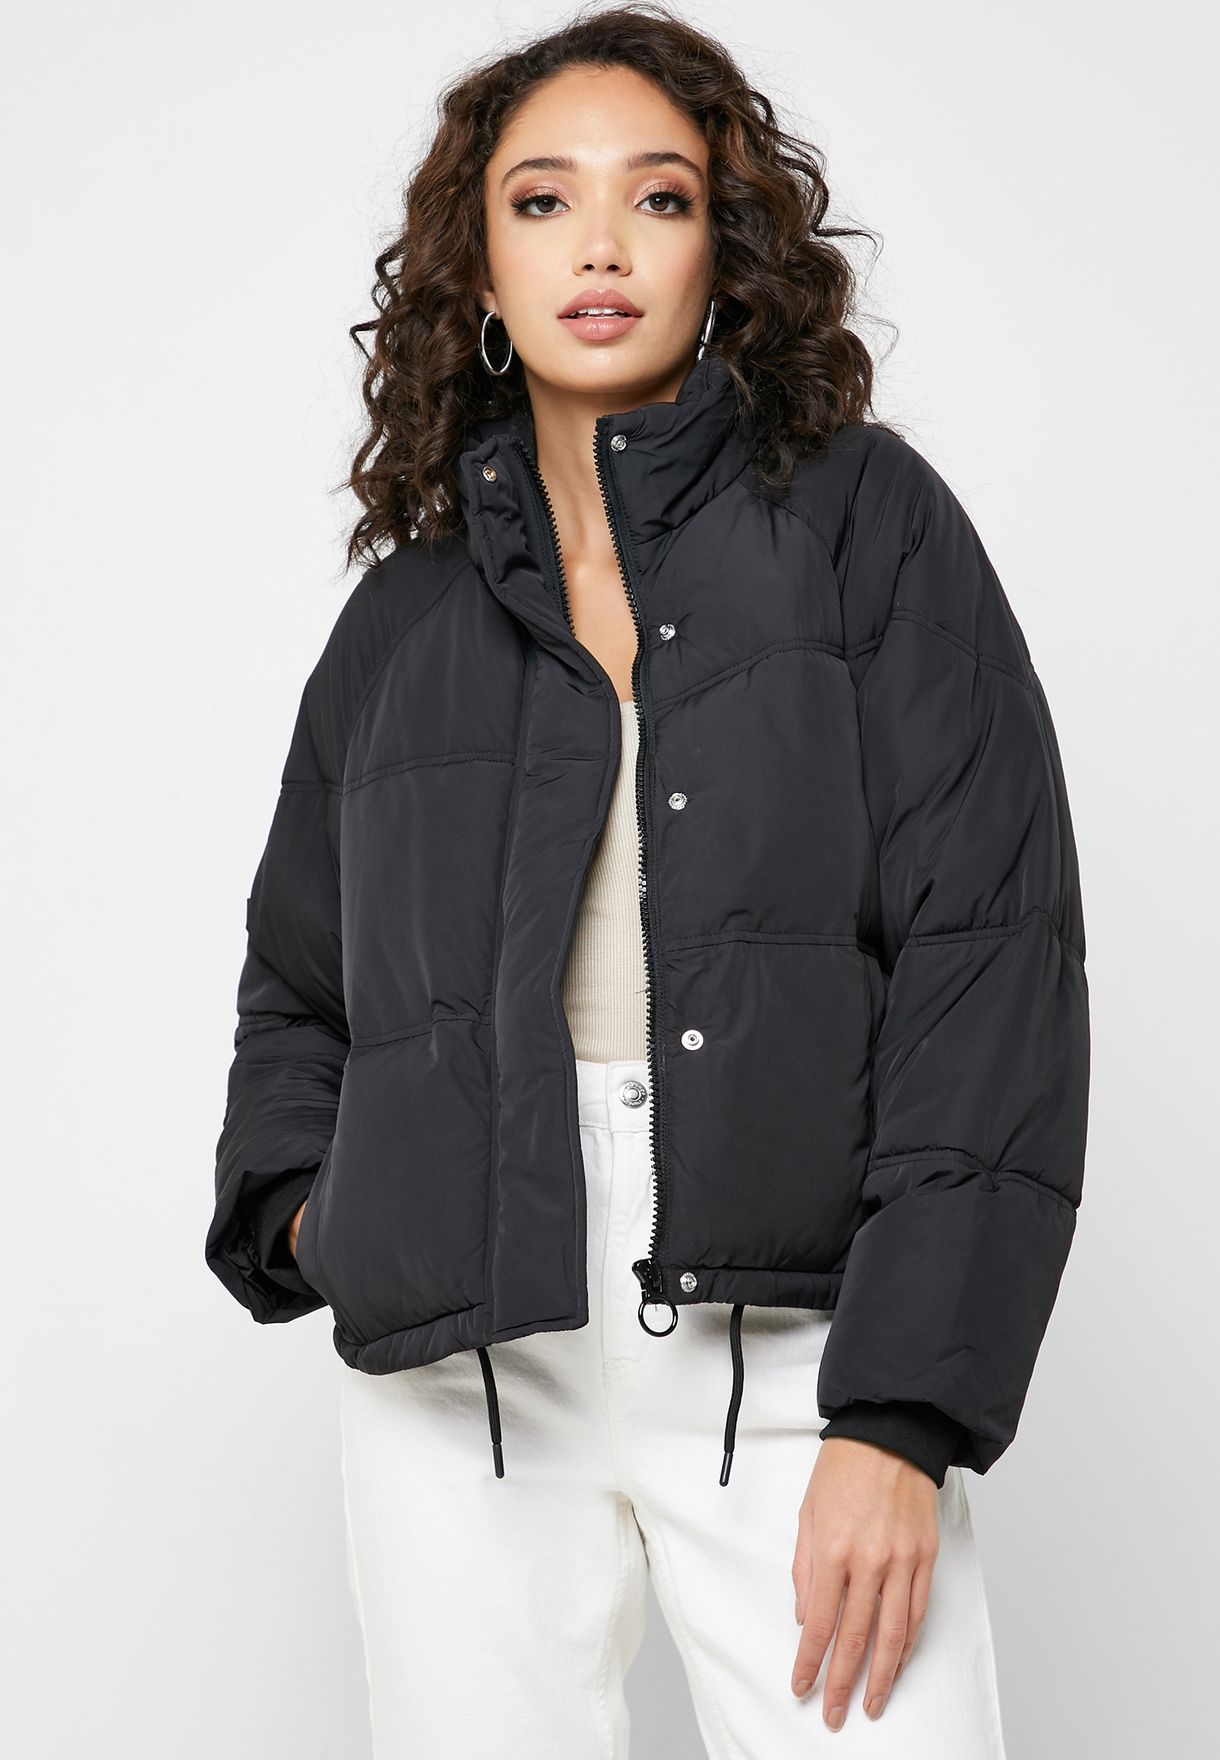 topshop black puffer jacket